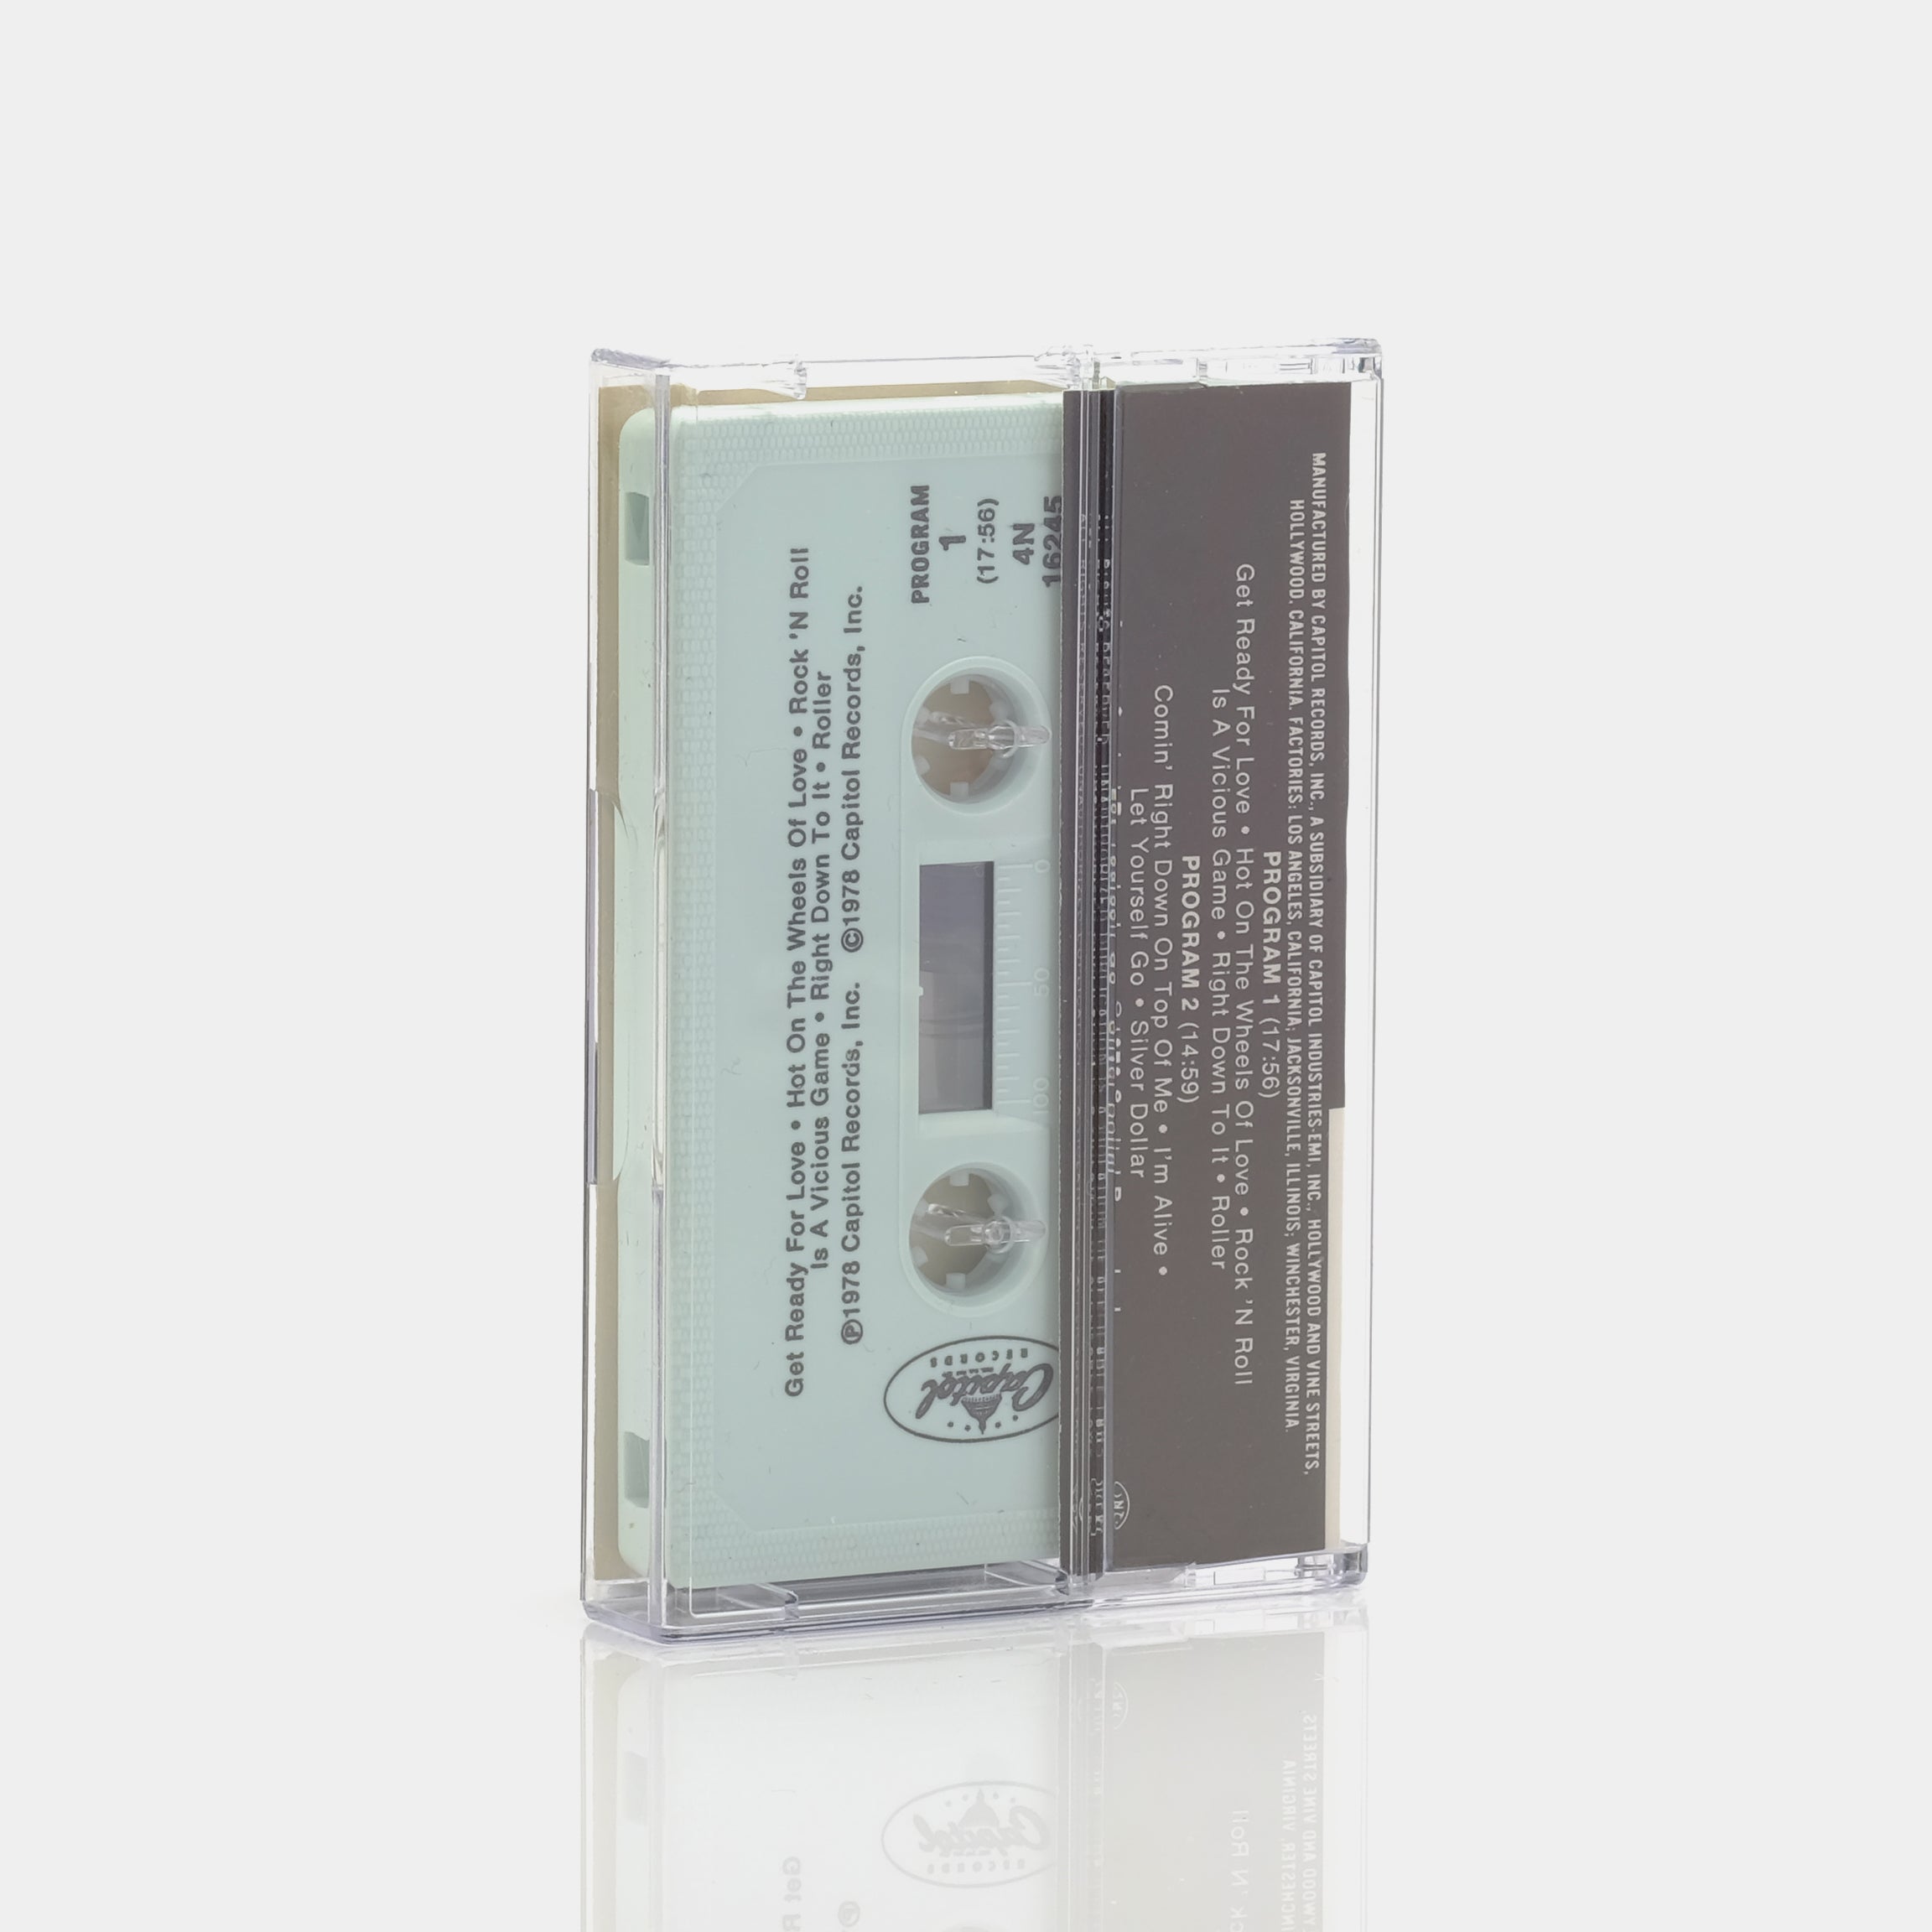 April Wine - First Glance Cassette Tape